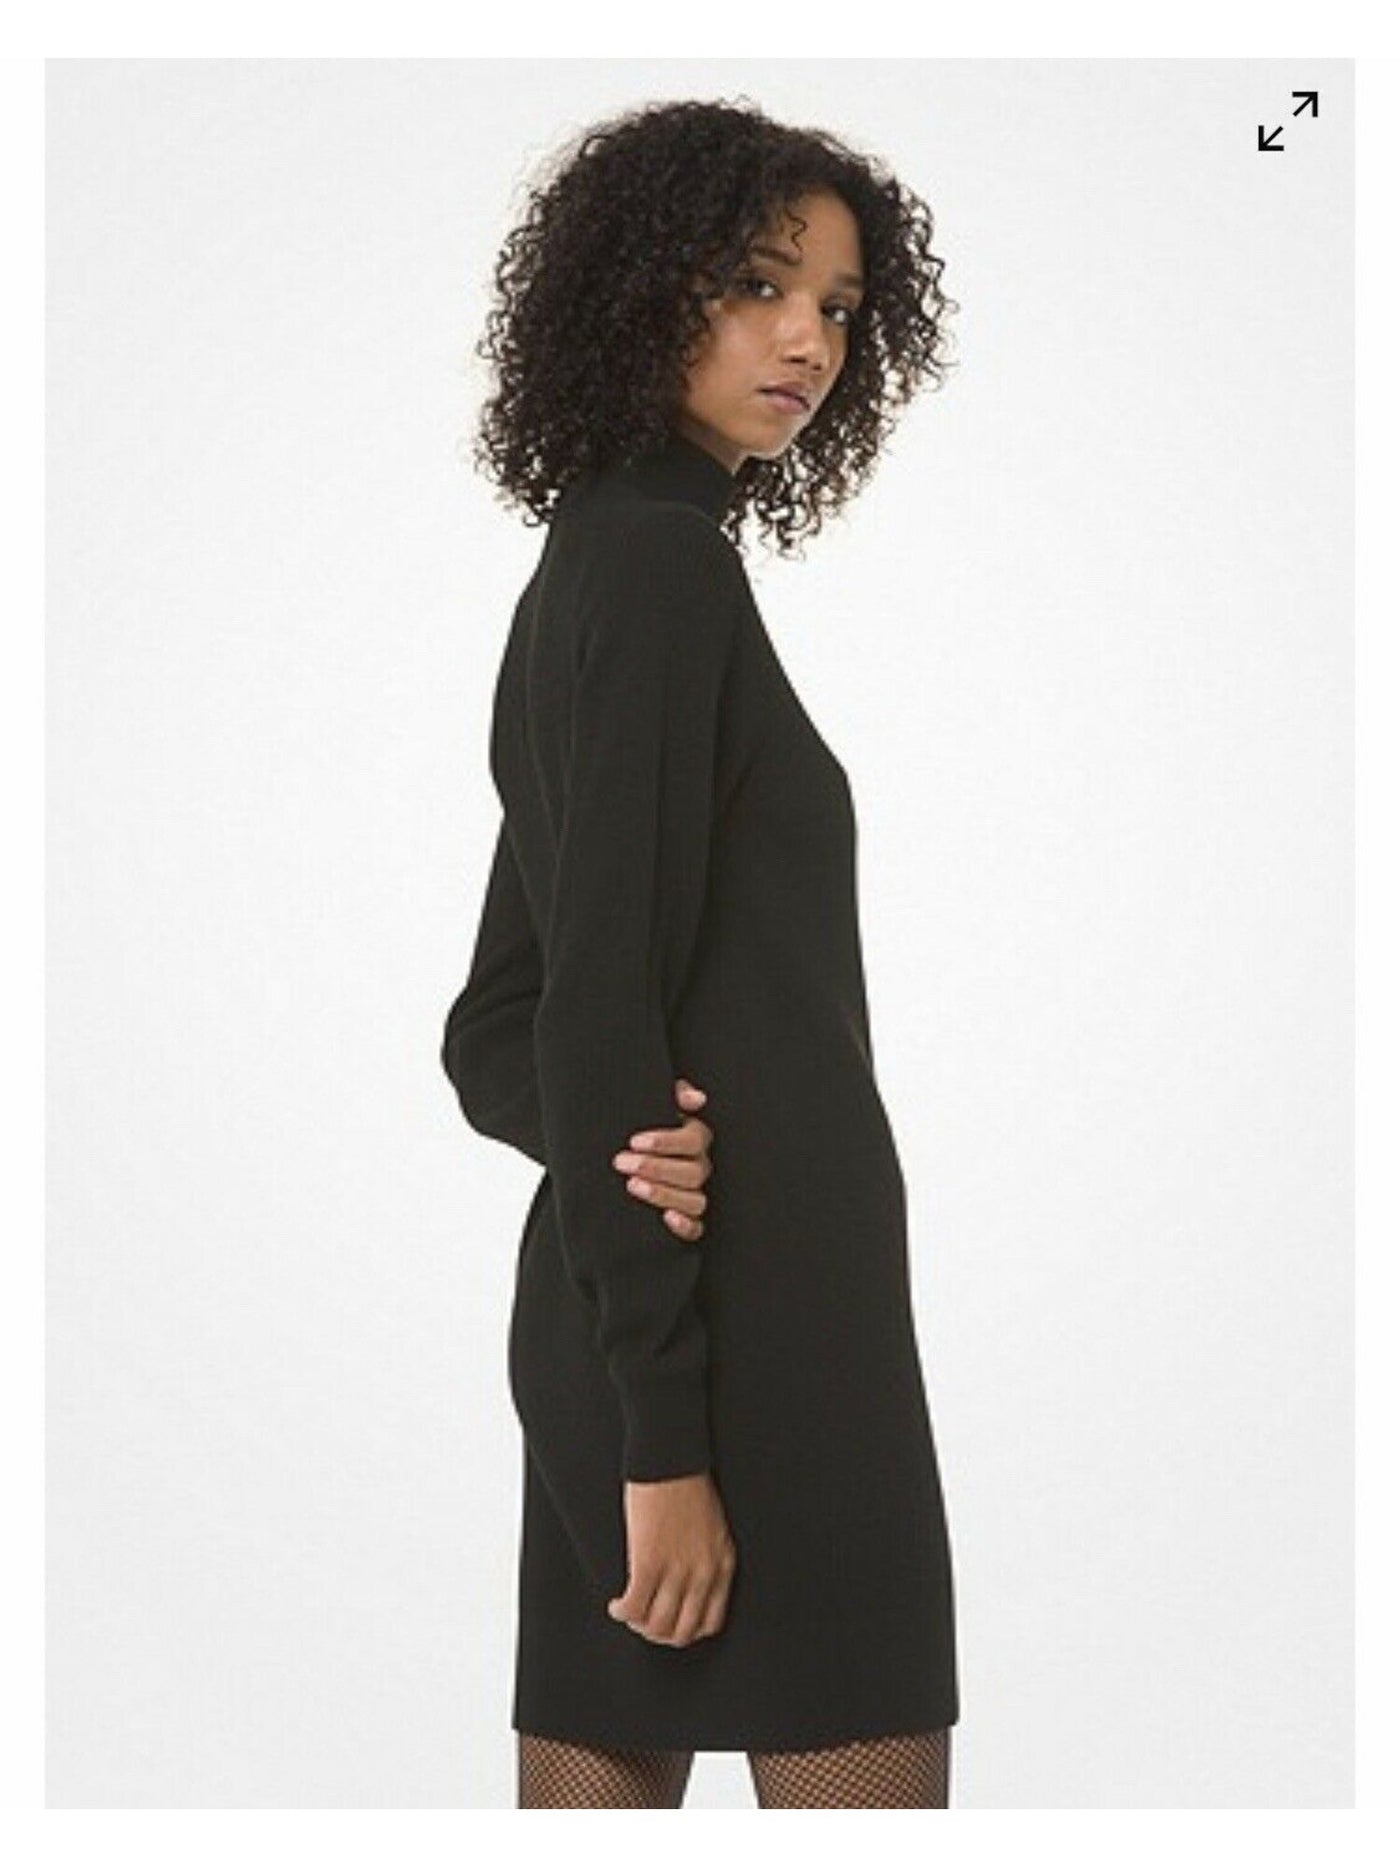 MICHAEL KORS Womens Black Long Sleeve Mini Body Con Dress XS